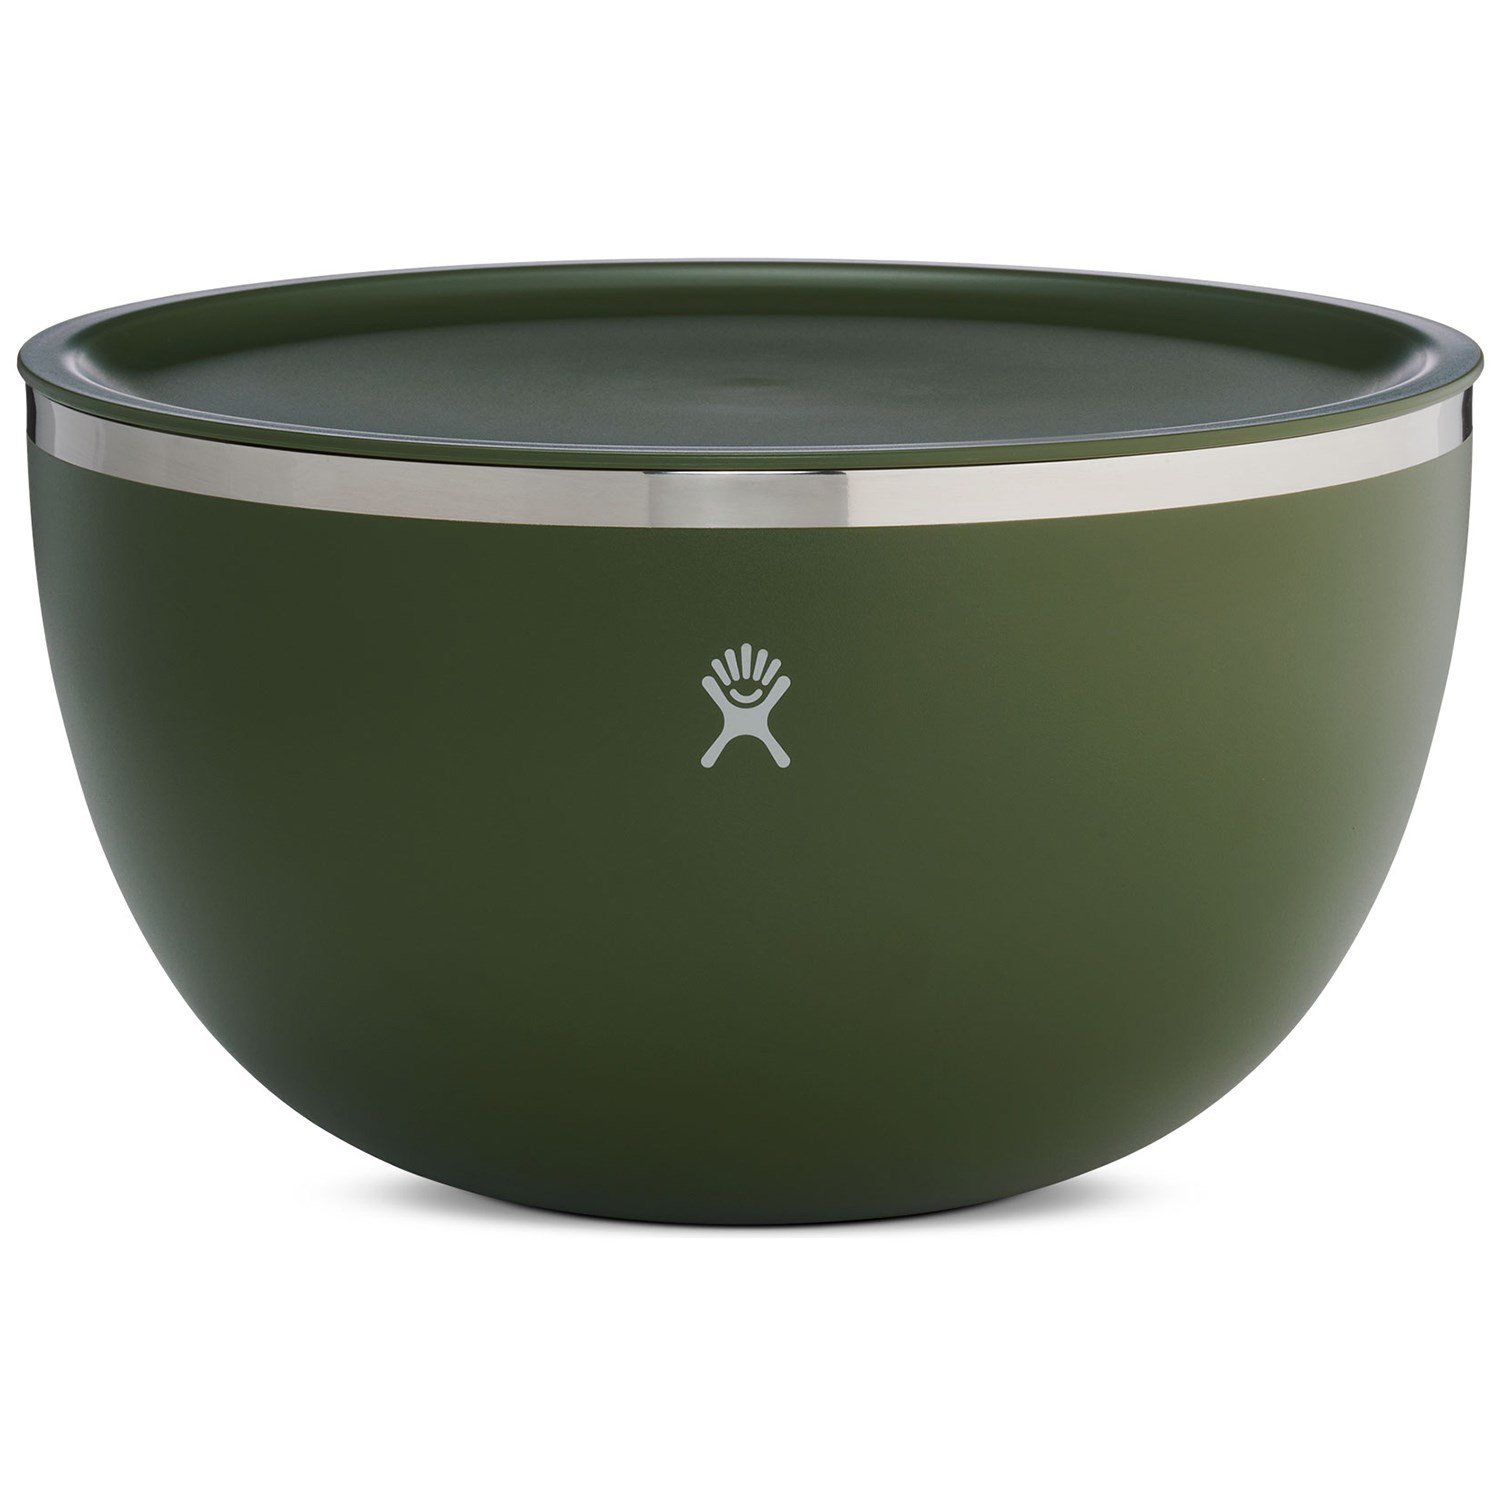 https://images.evo.com/imgp/zoom/188733/784088/hydro-flask-5-quart-serving-bowl-with-lid-.jpg